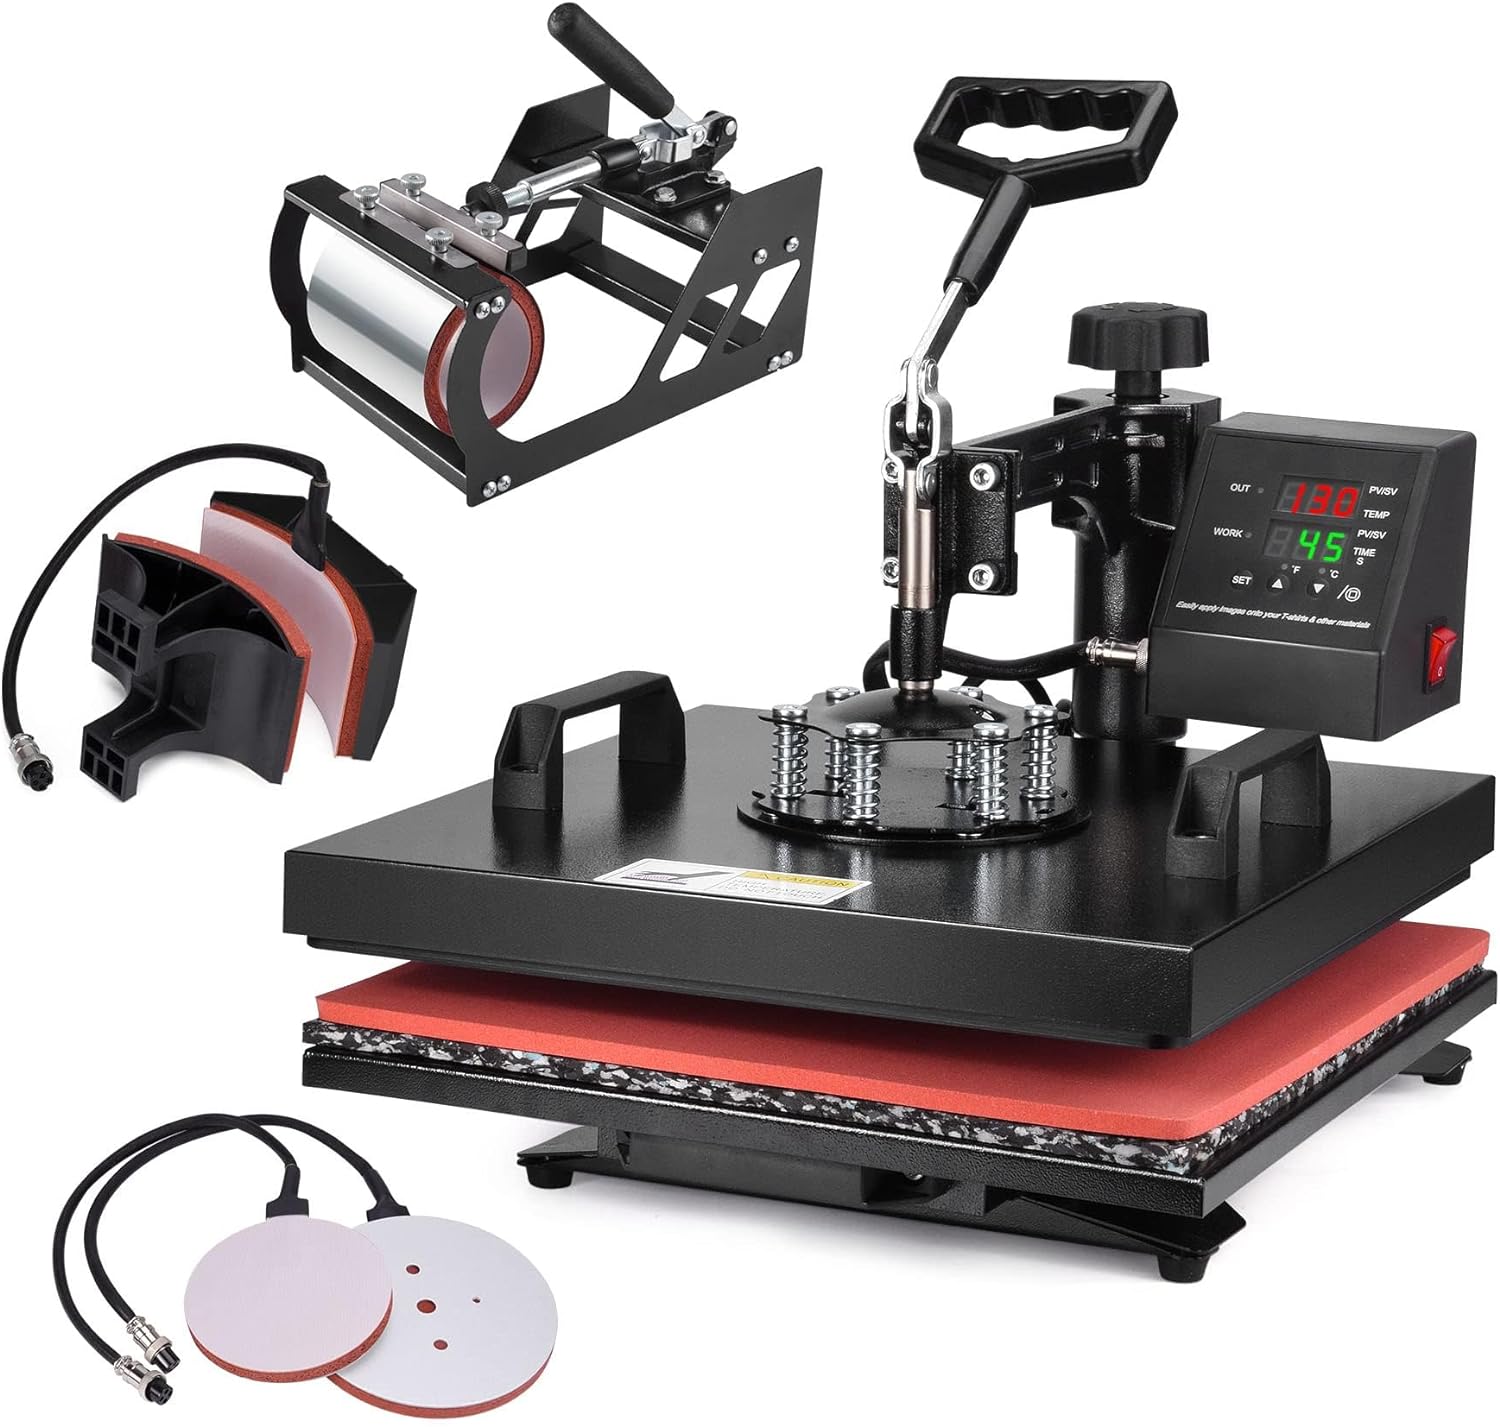 Slendor 5 in 1 Heat Press Machine 360-Degree Swing Away Digital   Multifunction Heat Transfer 15